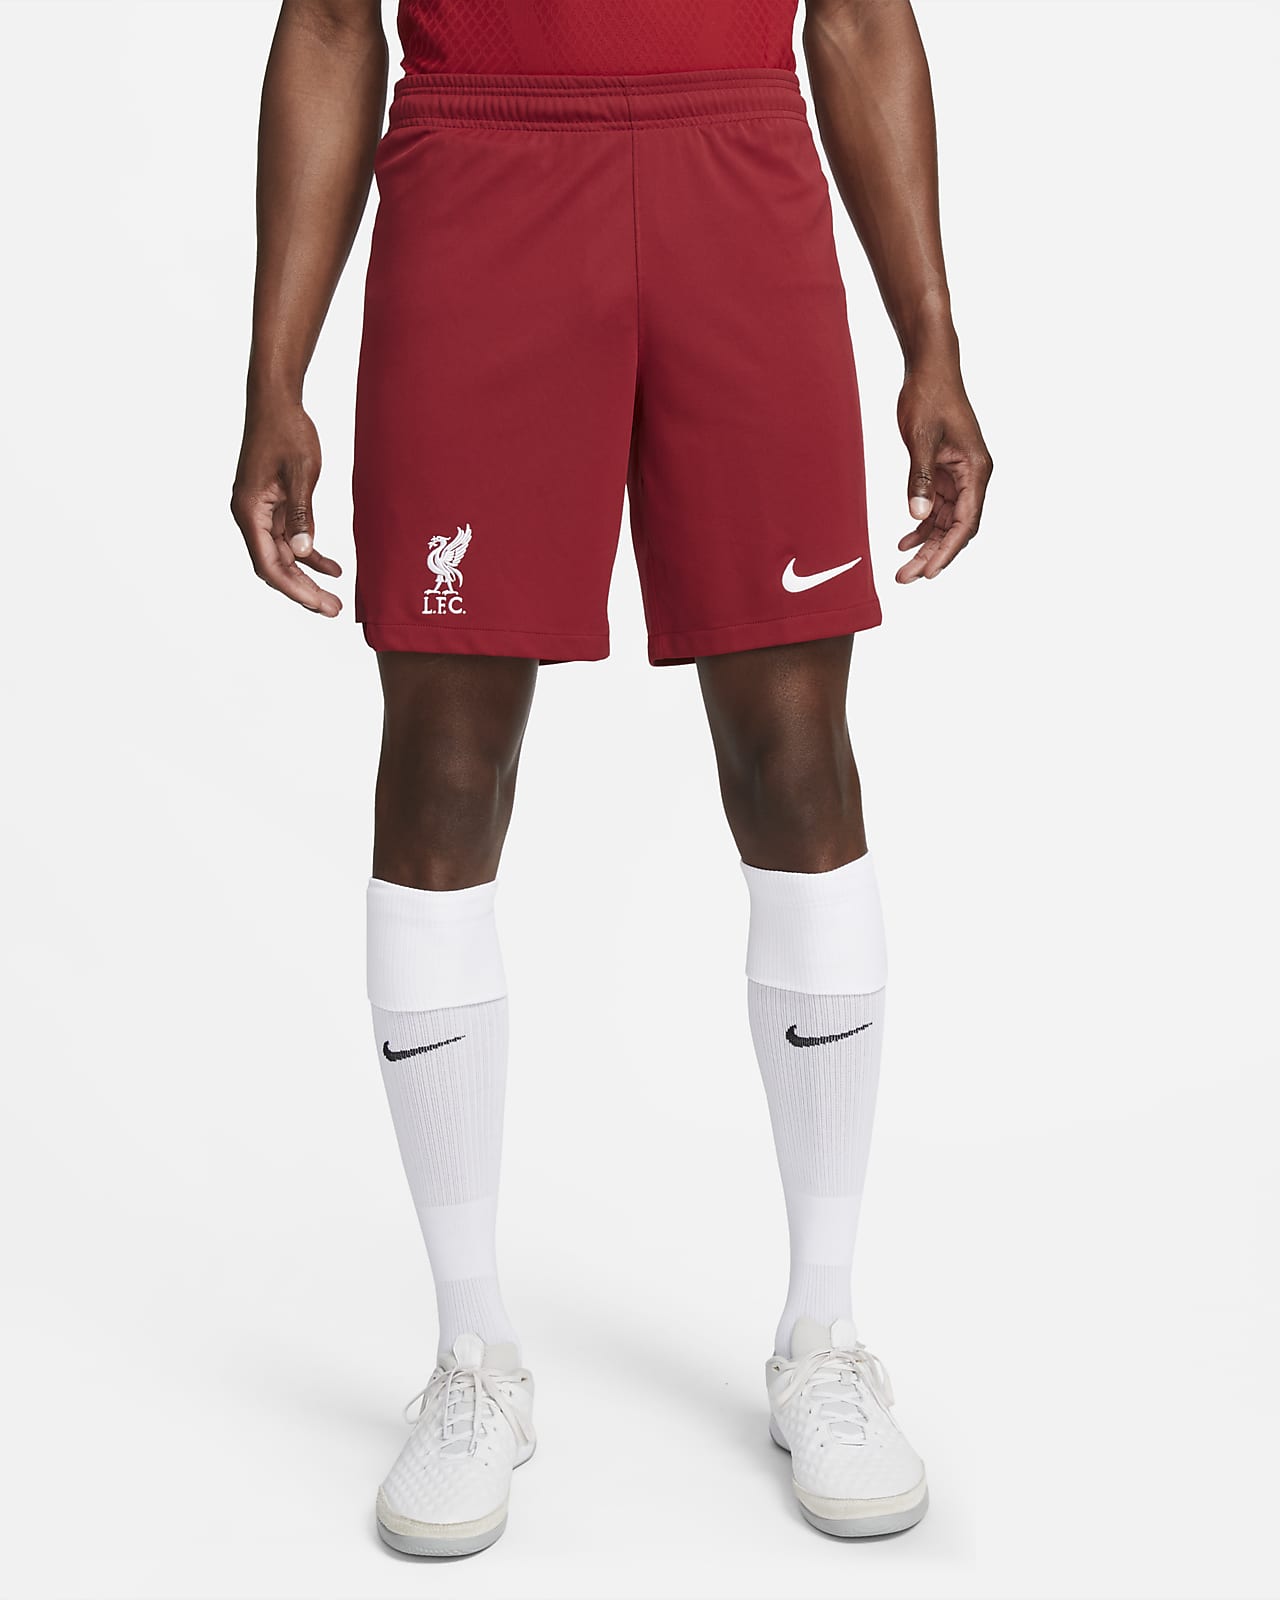 Liverpool FC Stadium Home Men's Nike Dri-FIT Soccer Shorts.